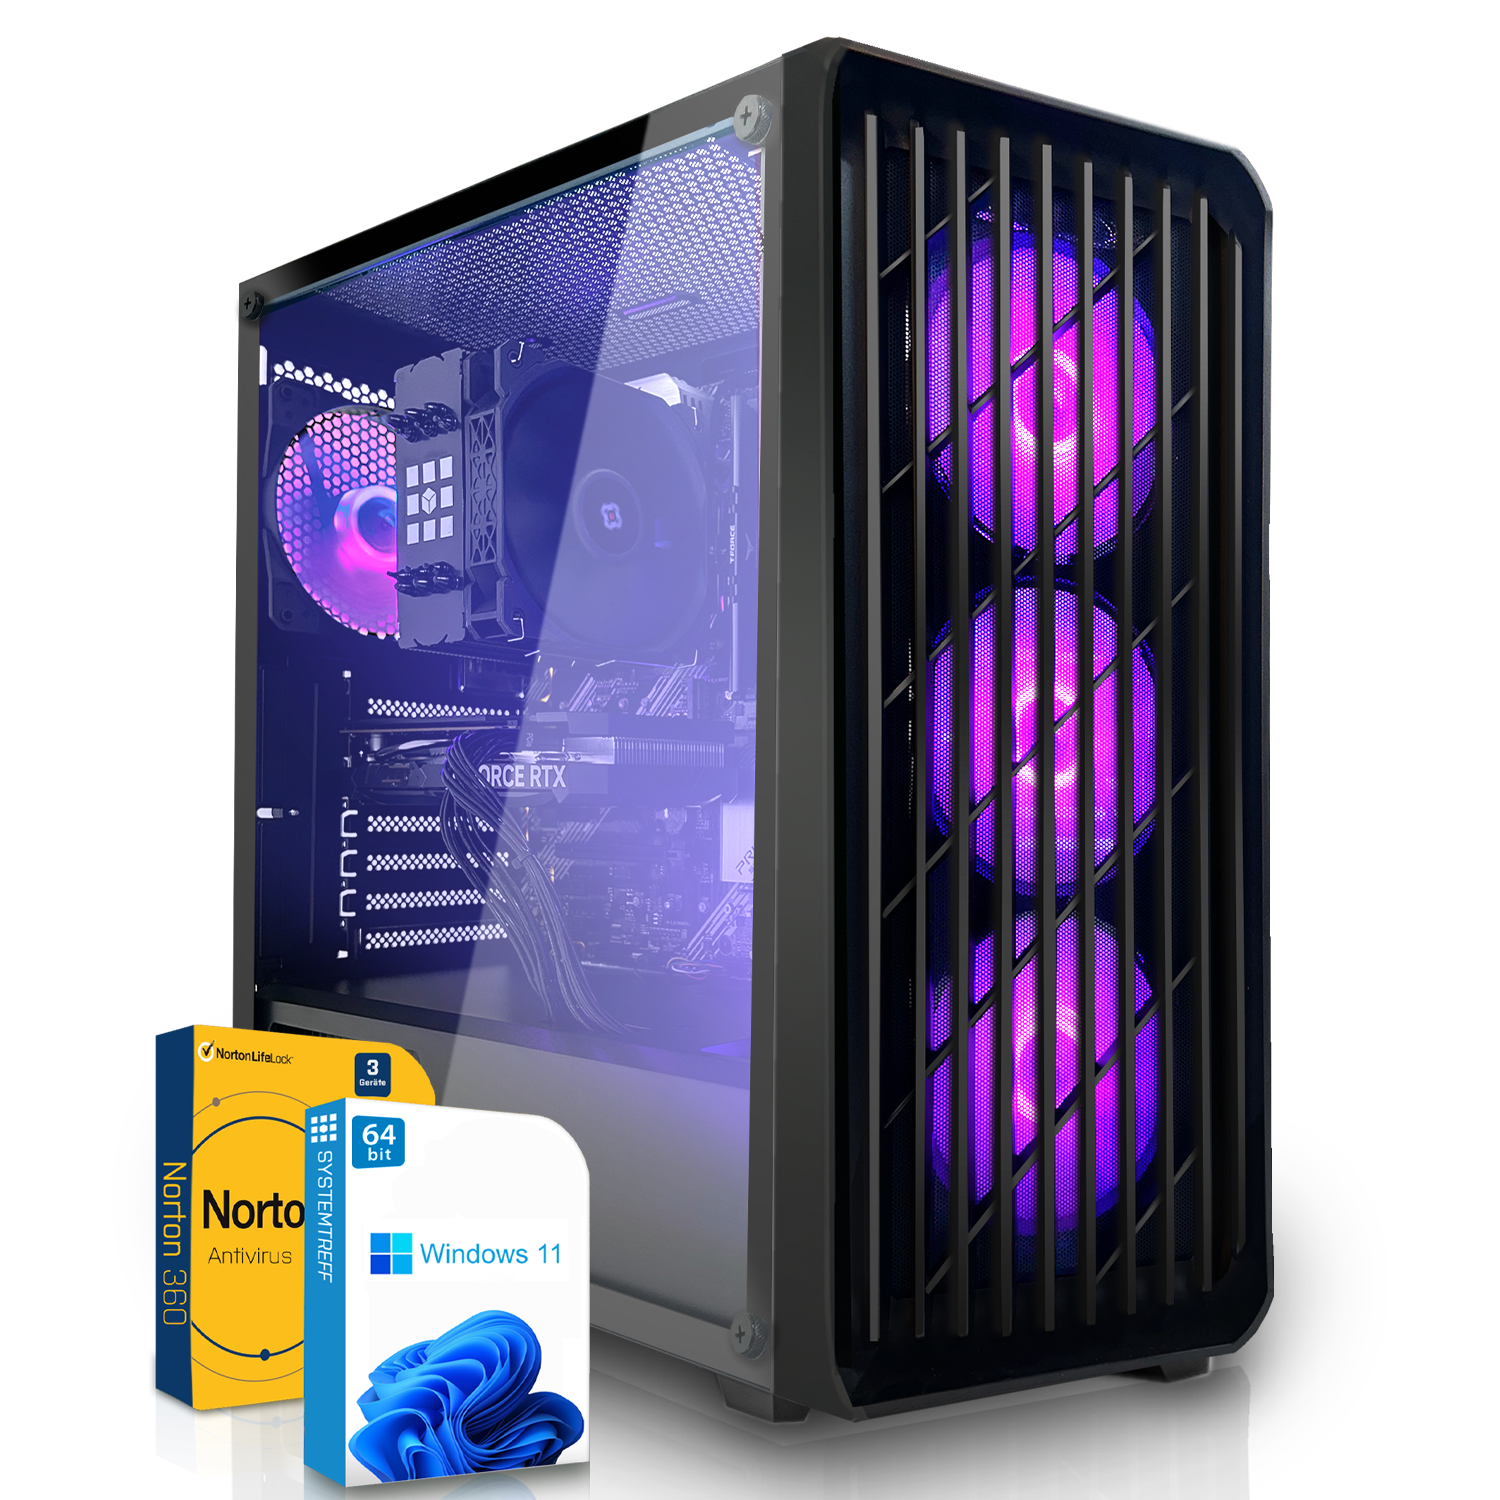 SYSTEMTREFF Pro Gaming AMD 7600S 5 1000 RAM, 7600X, Radeon™ Ryzen™ 5 mSSD, mit 11 Ryzen Prozessor, AMD RX Pro, Windows GB Gaming 32 AMD PC GB